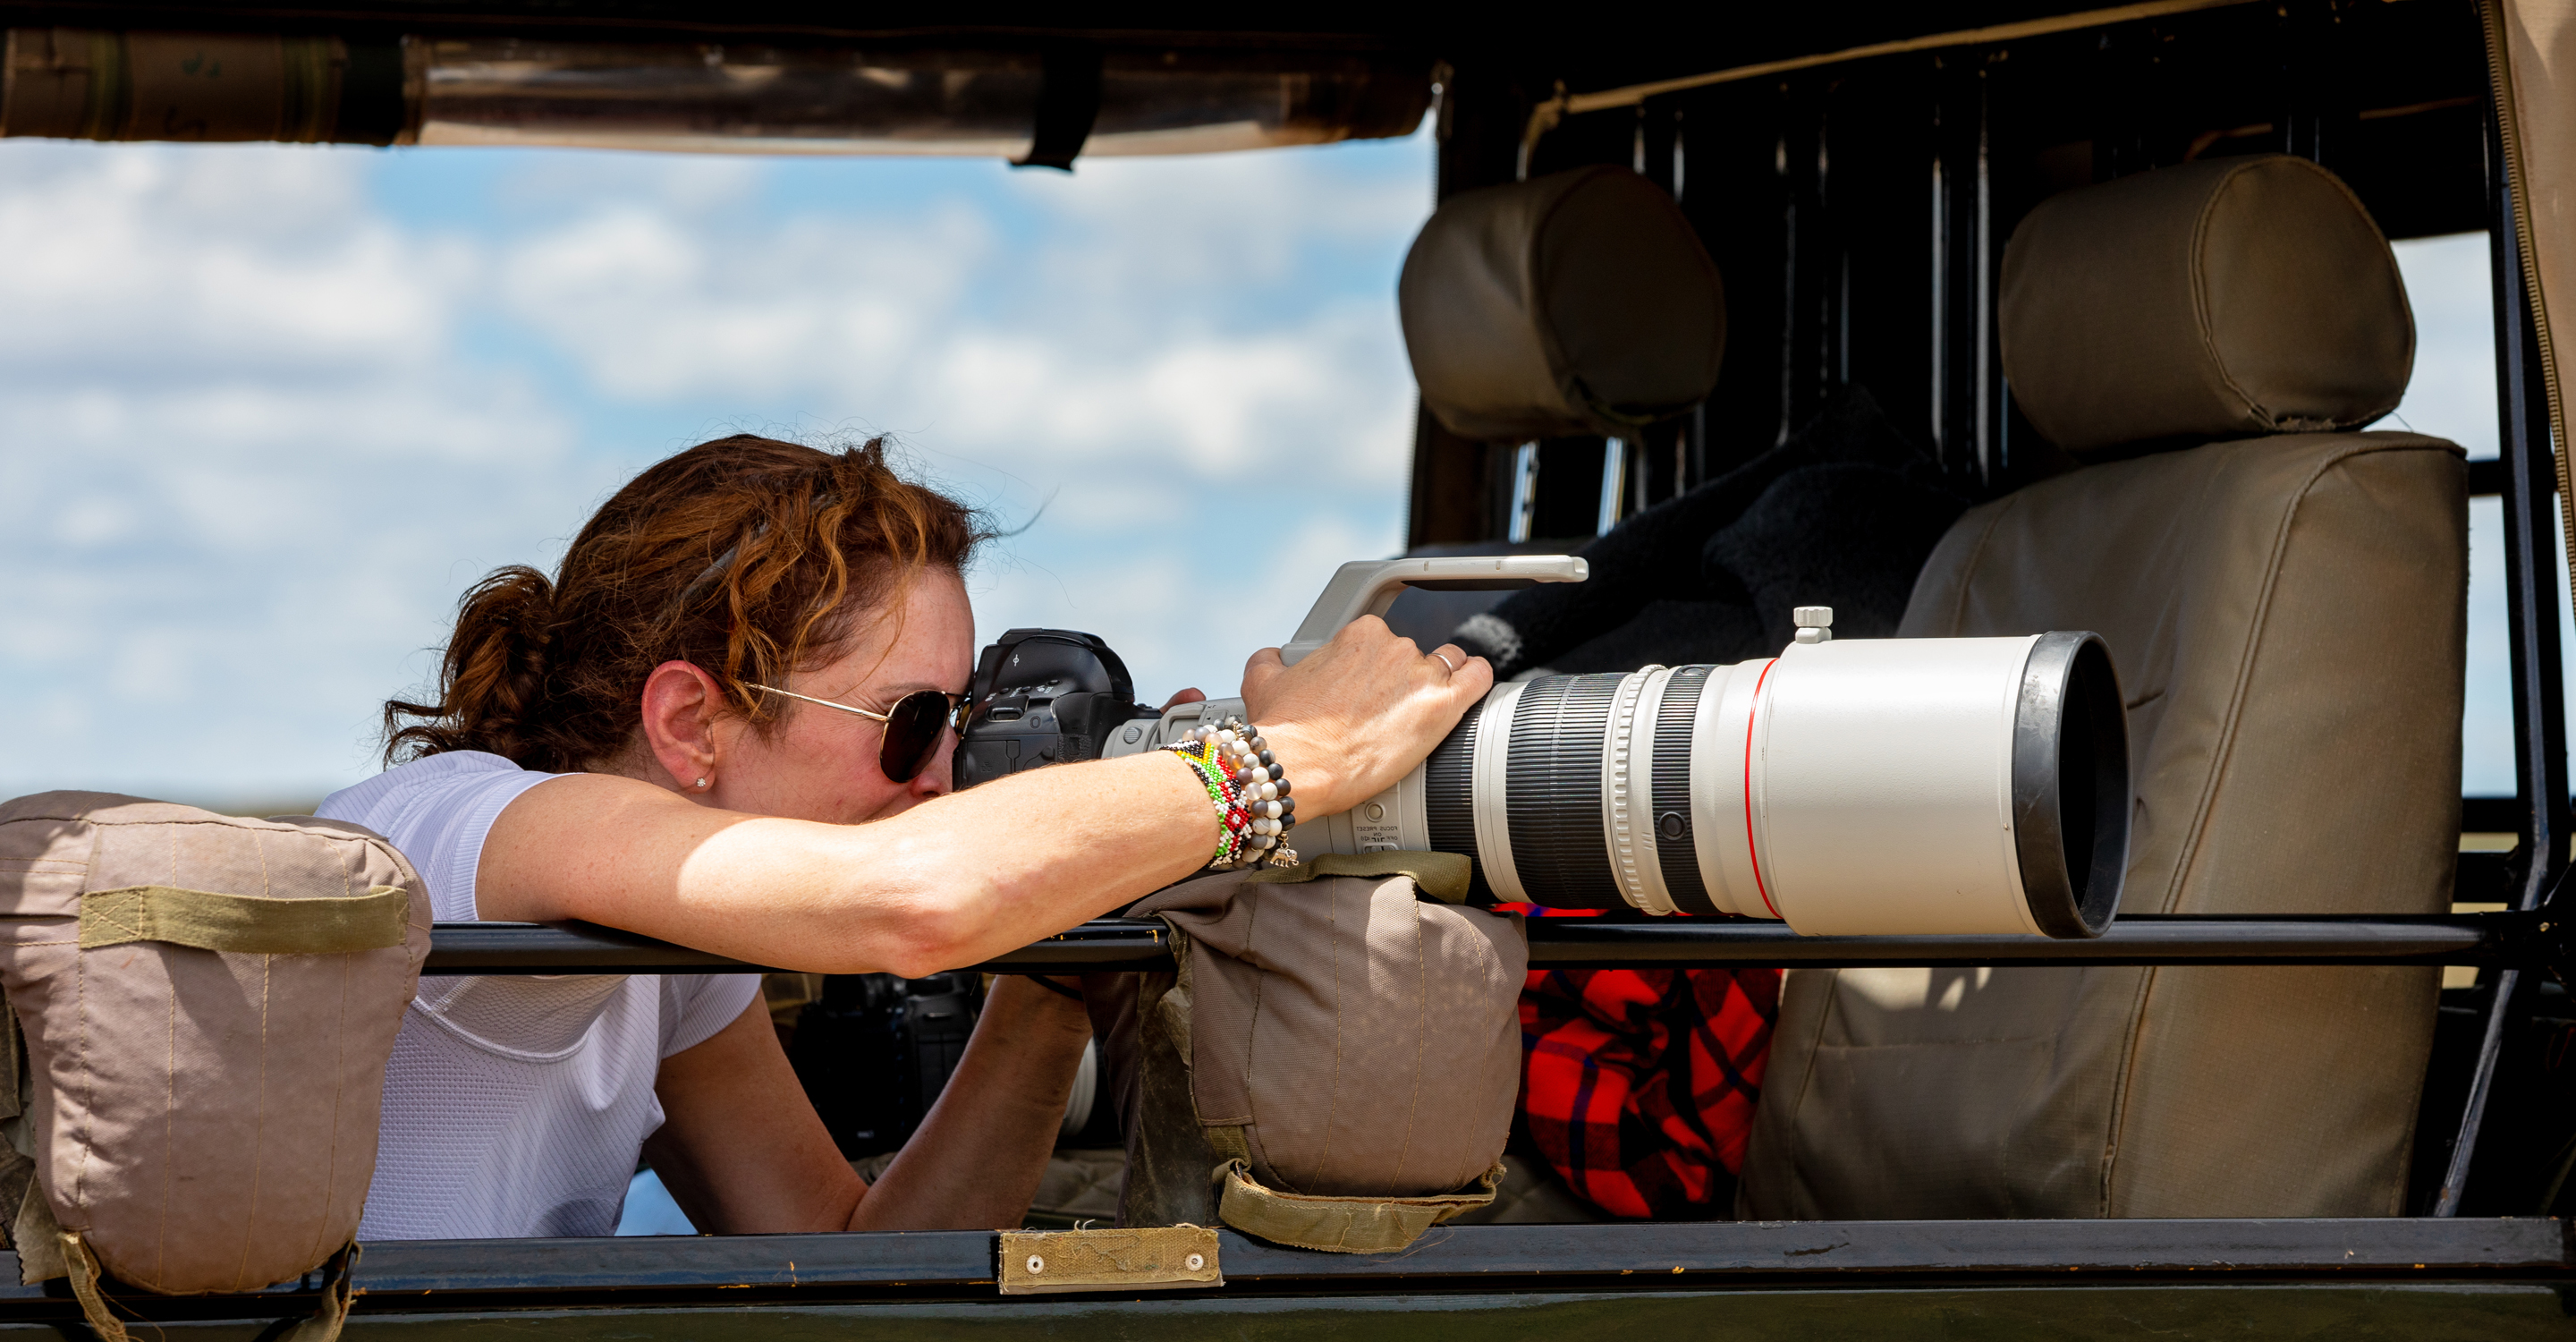 A professional photographer on safari rests her camera on a bean bag and photographs wildlife in the Maasai Mara, Kenya